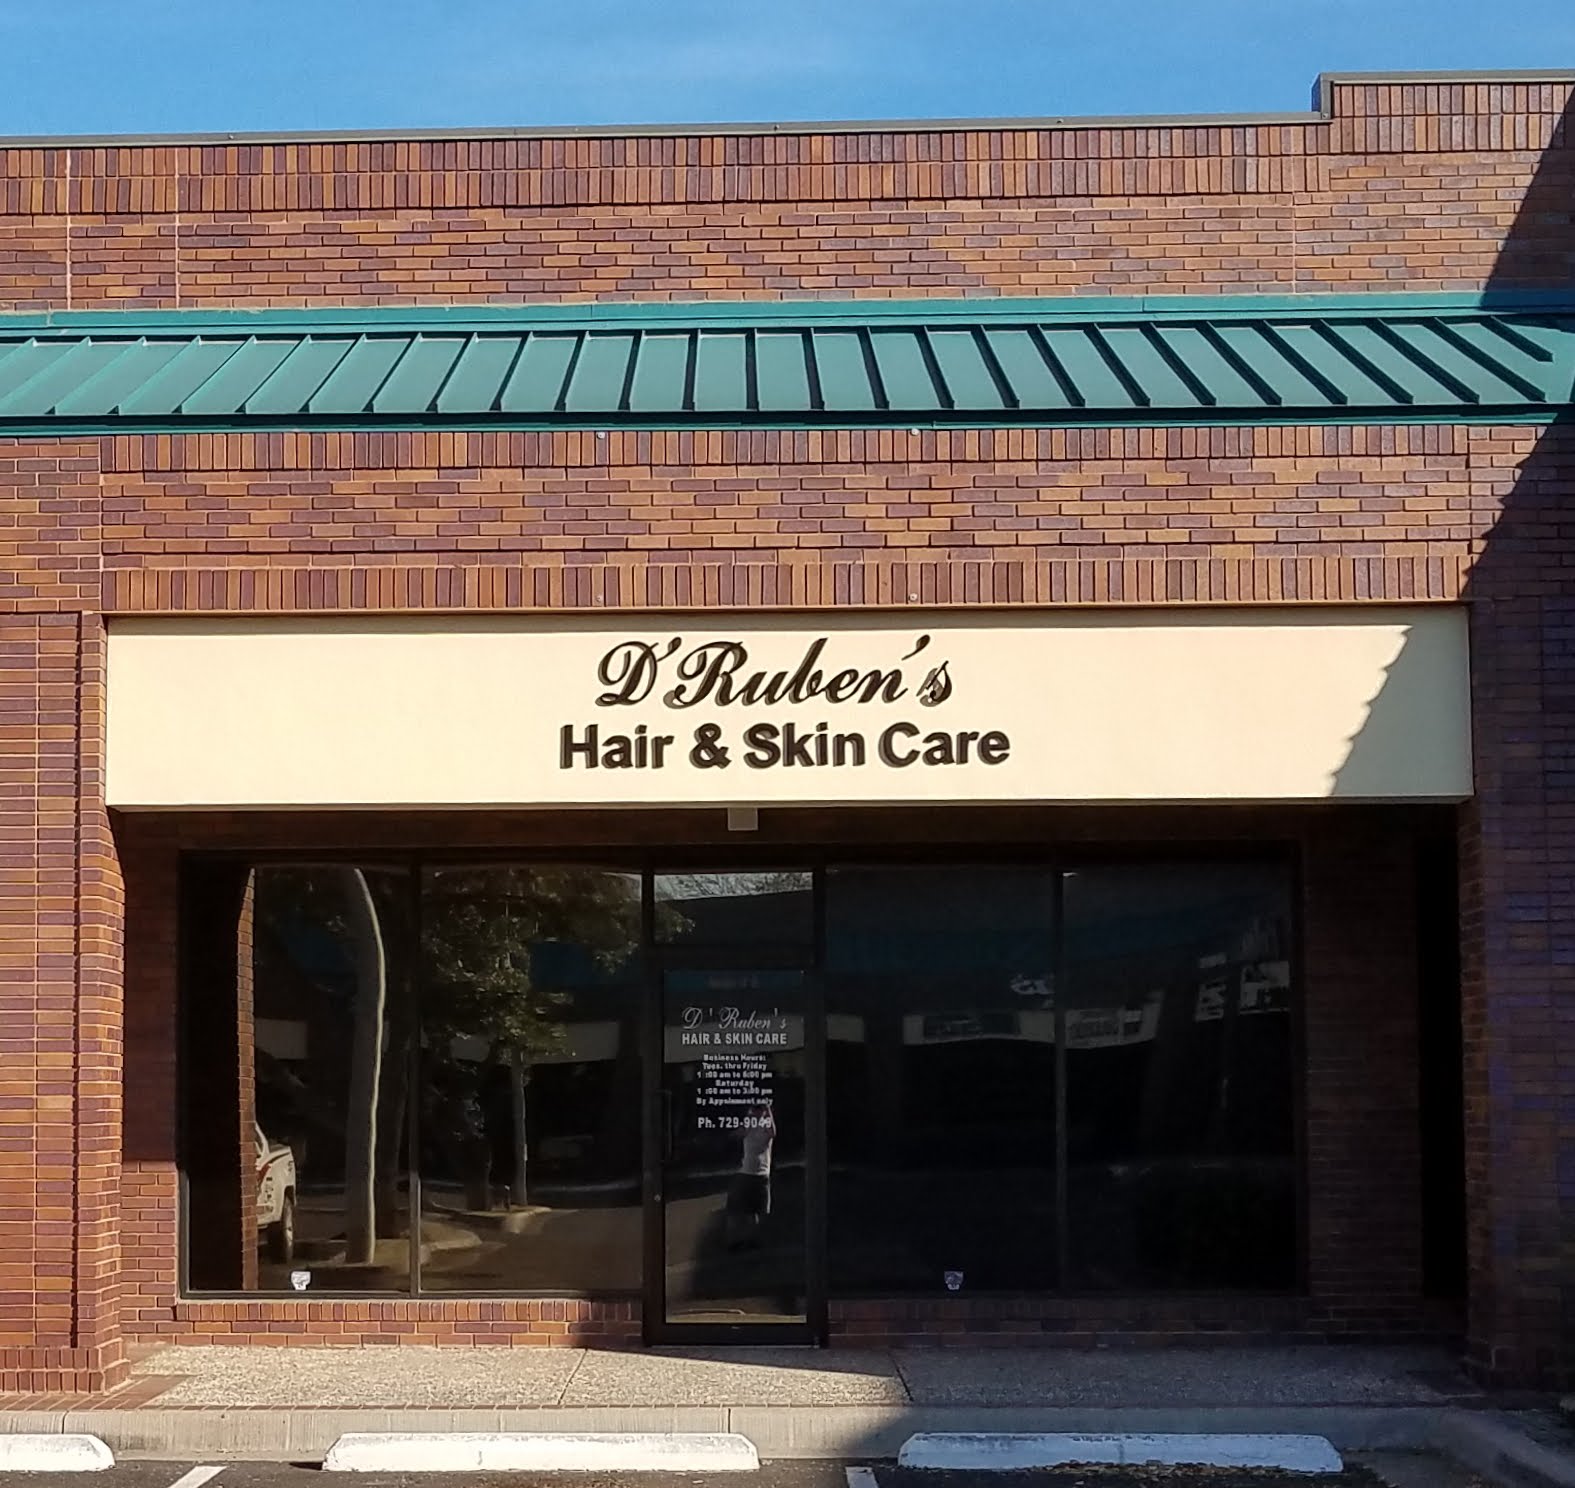 D'Ruben's Hair & Skin Care